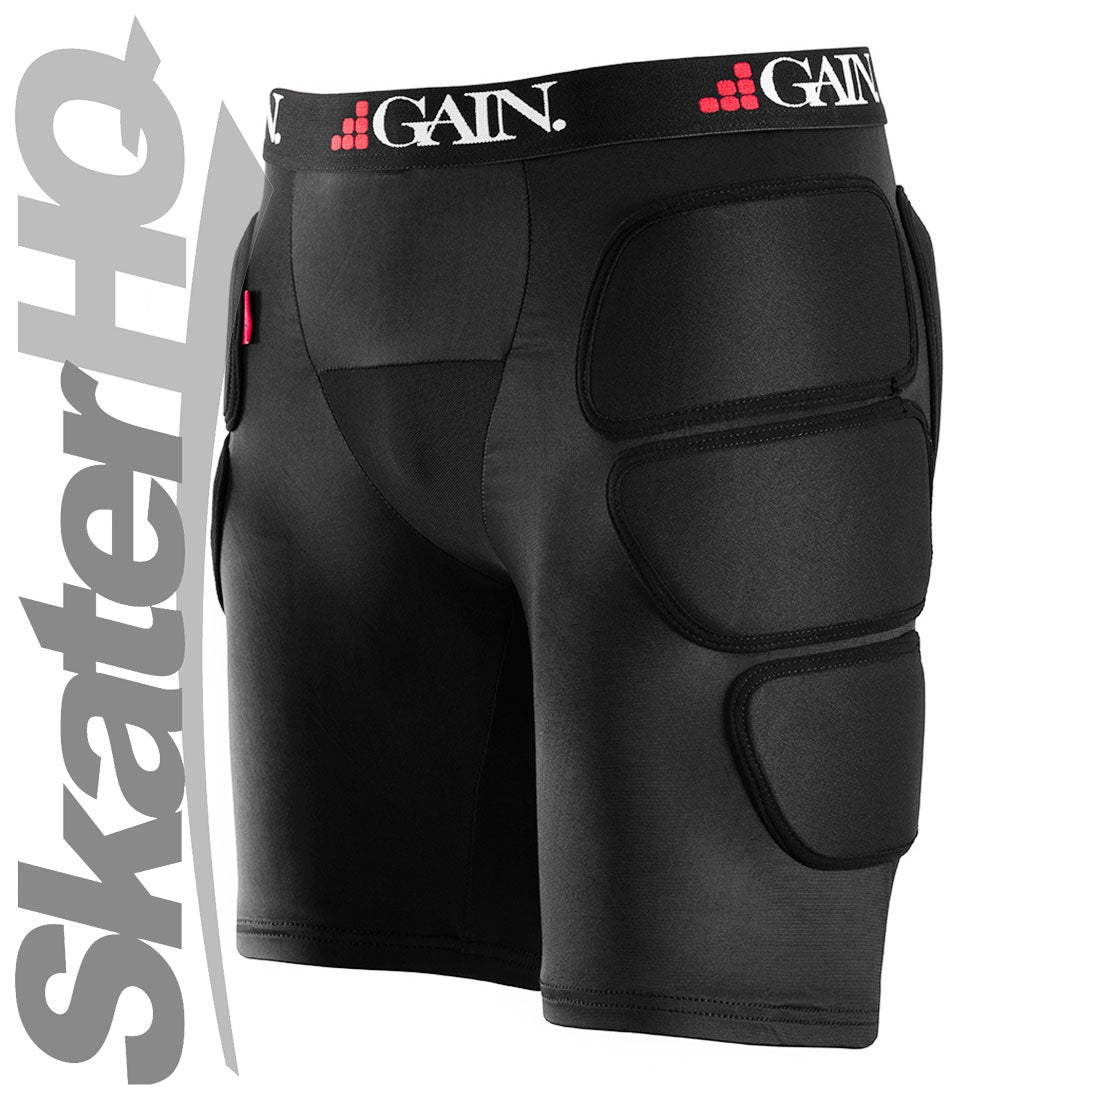 GAIN Sleeper Hip/Bum Pads - Black - XL Protective Gear